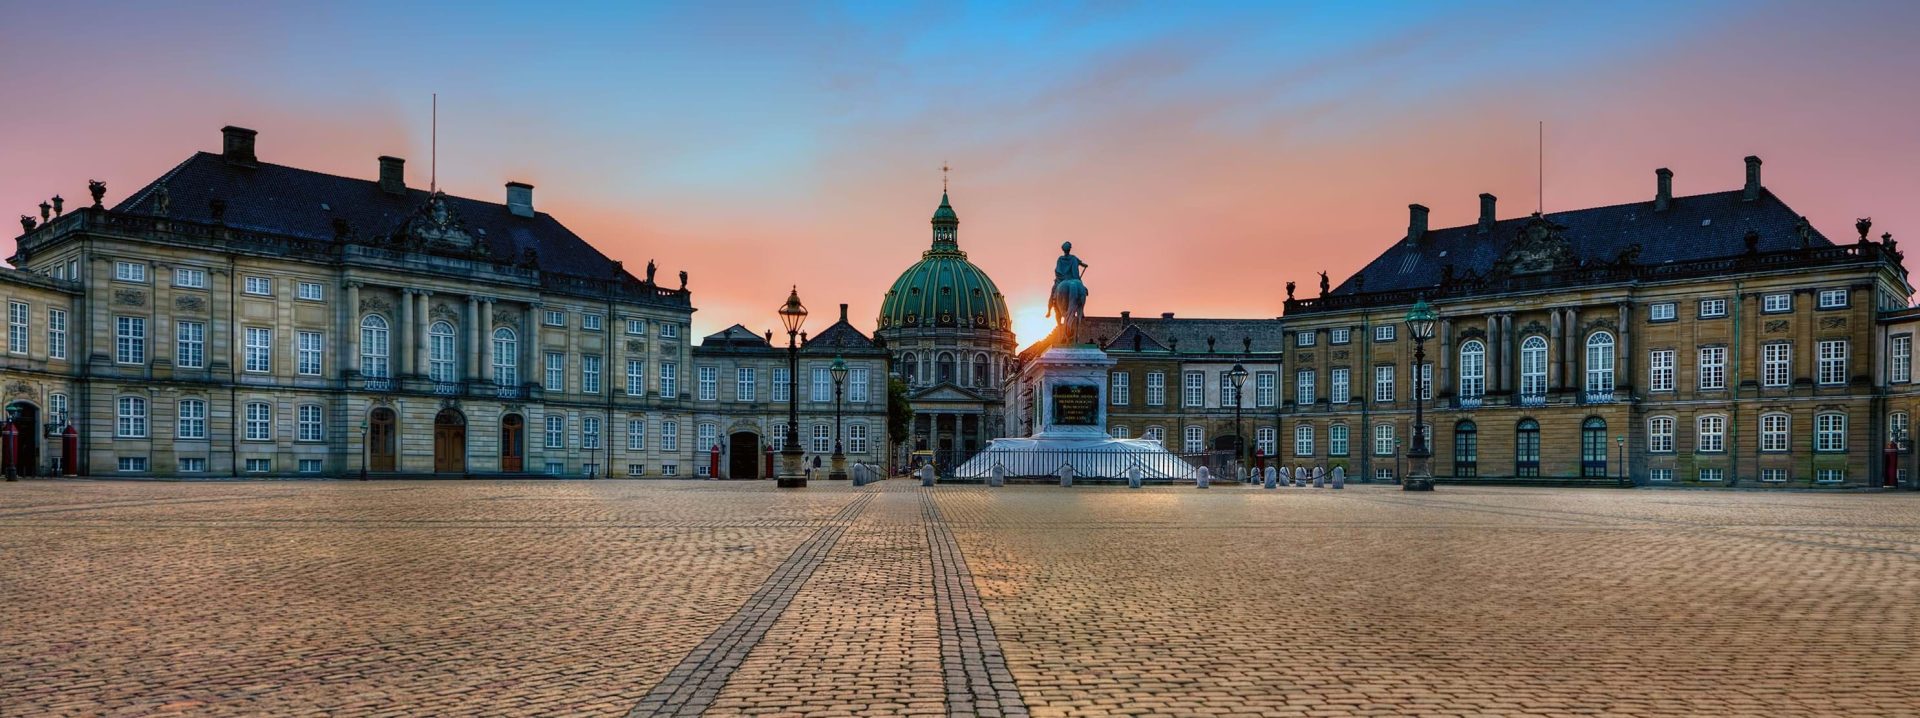 Amalienborg Palace in Copenhagen at sunset